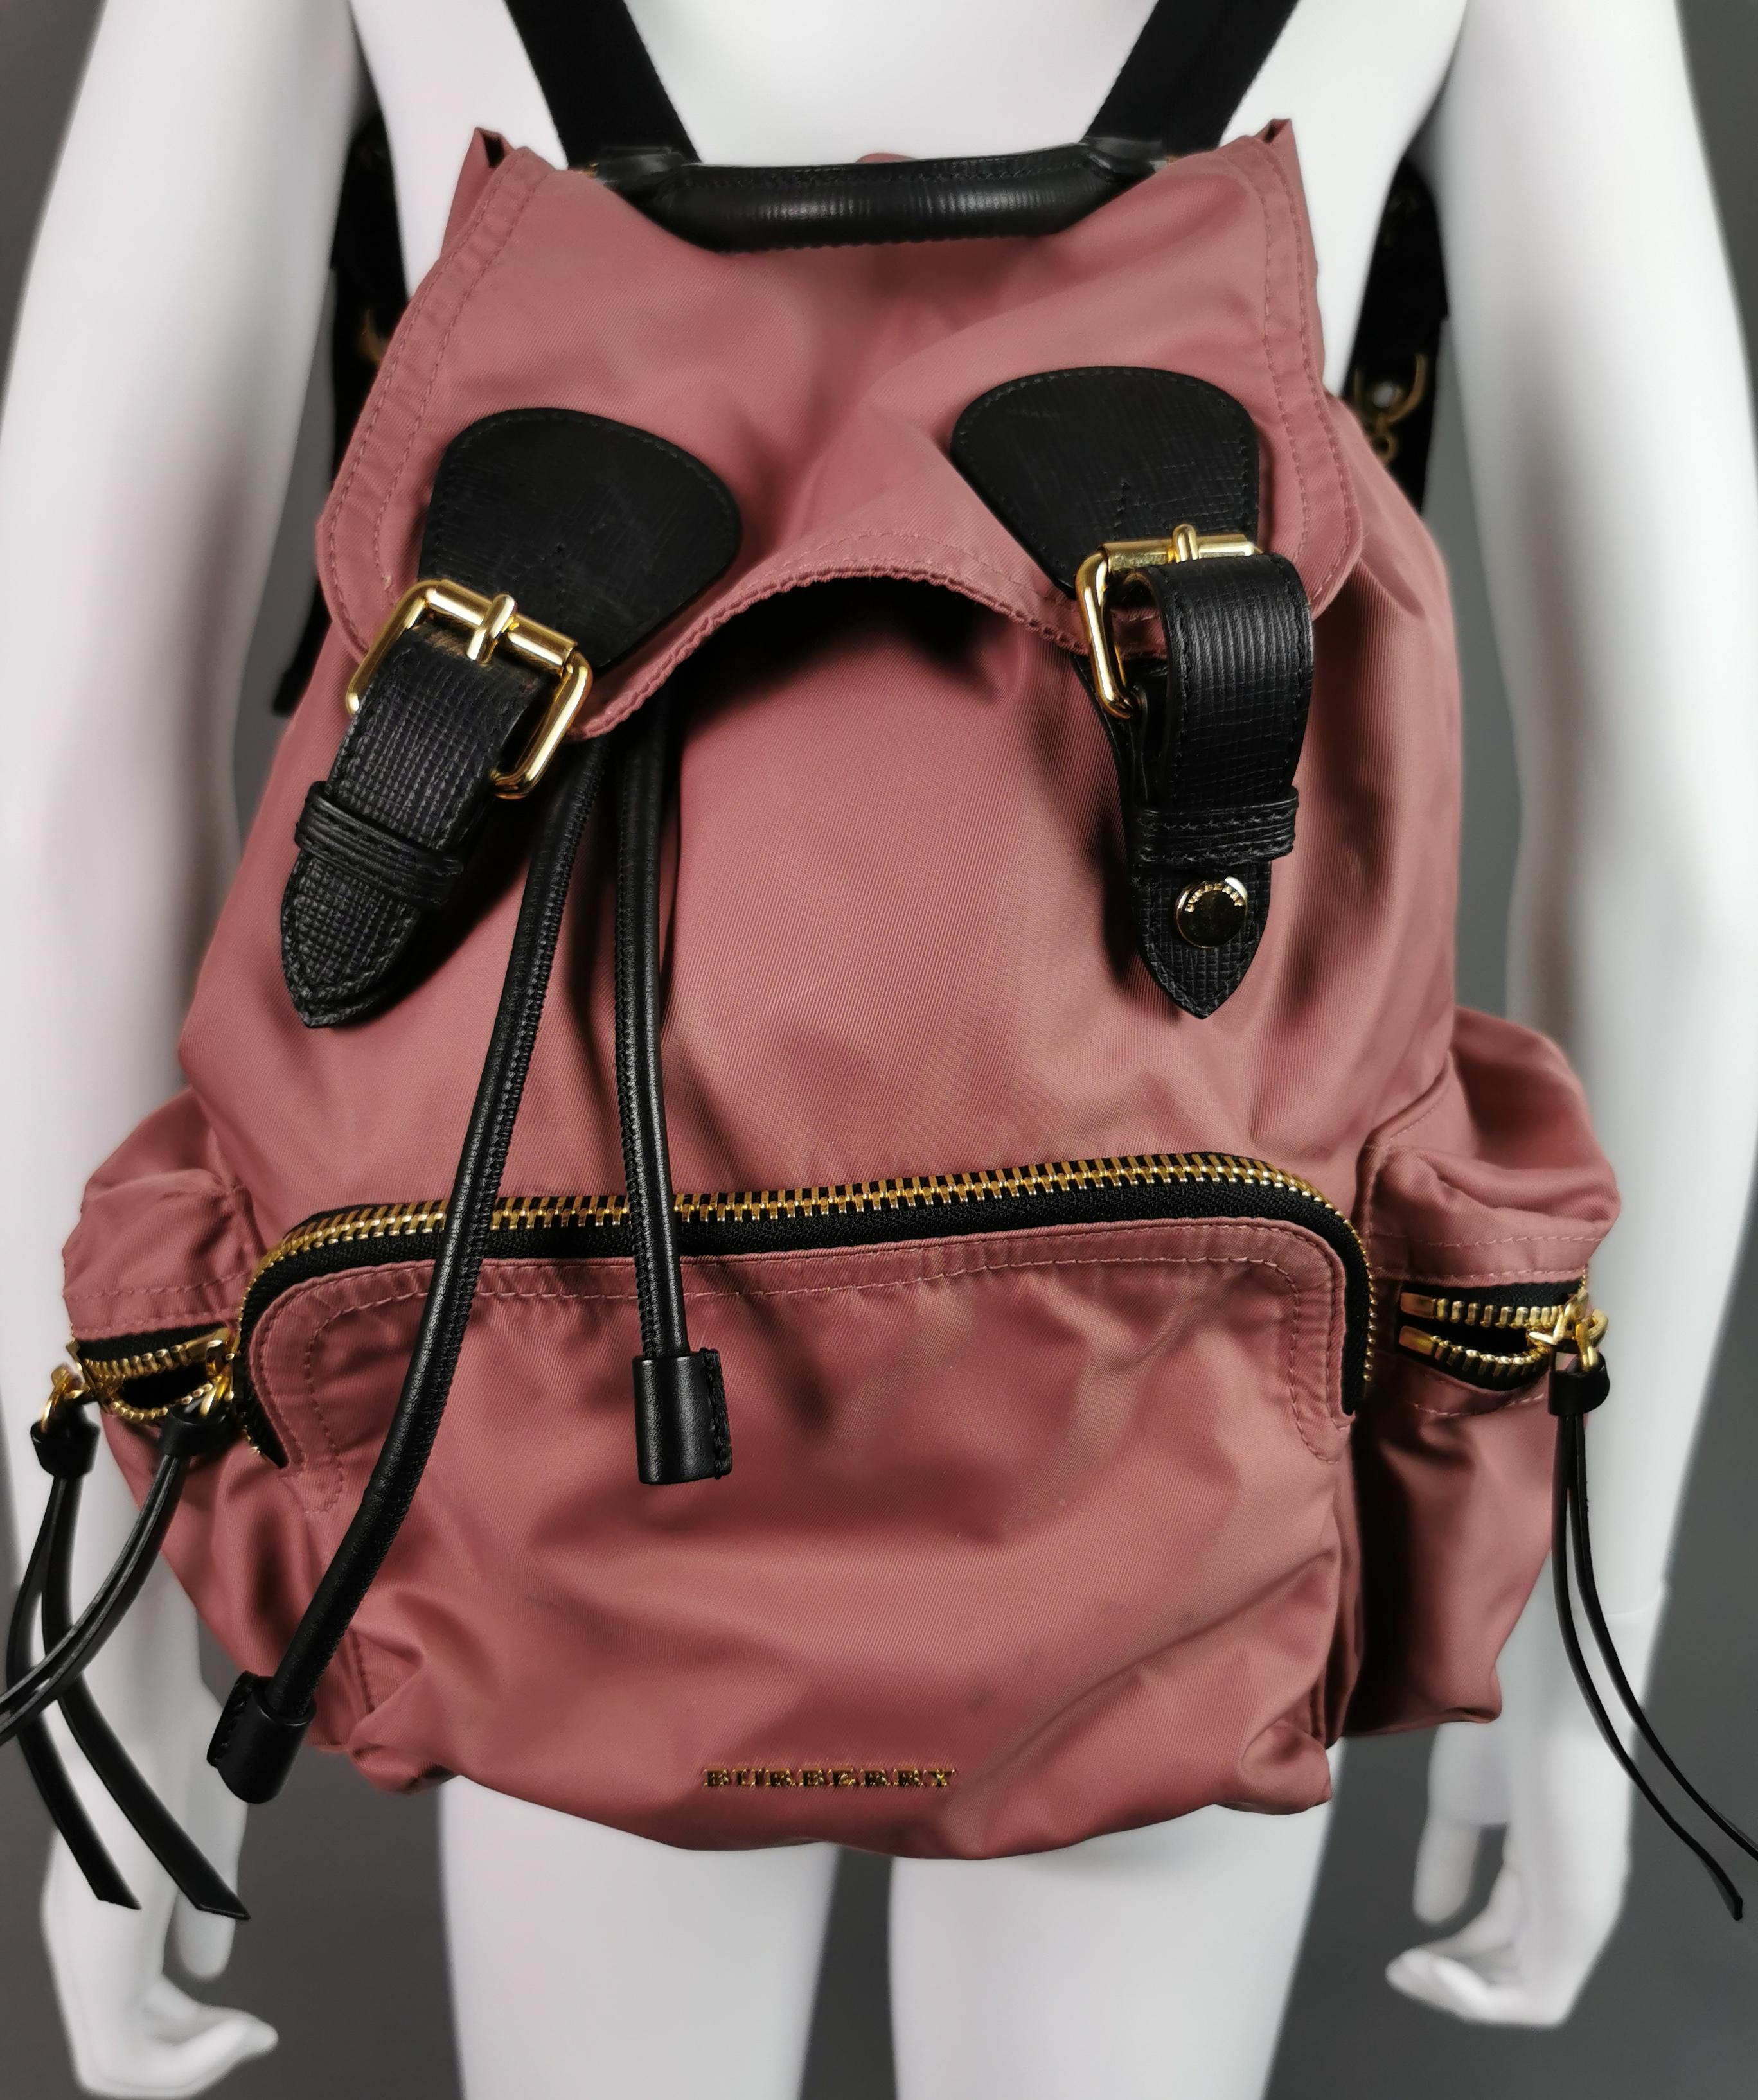 Burberry The Rucksack, pink nylon backpack, gold tone hardware  2